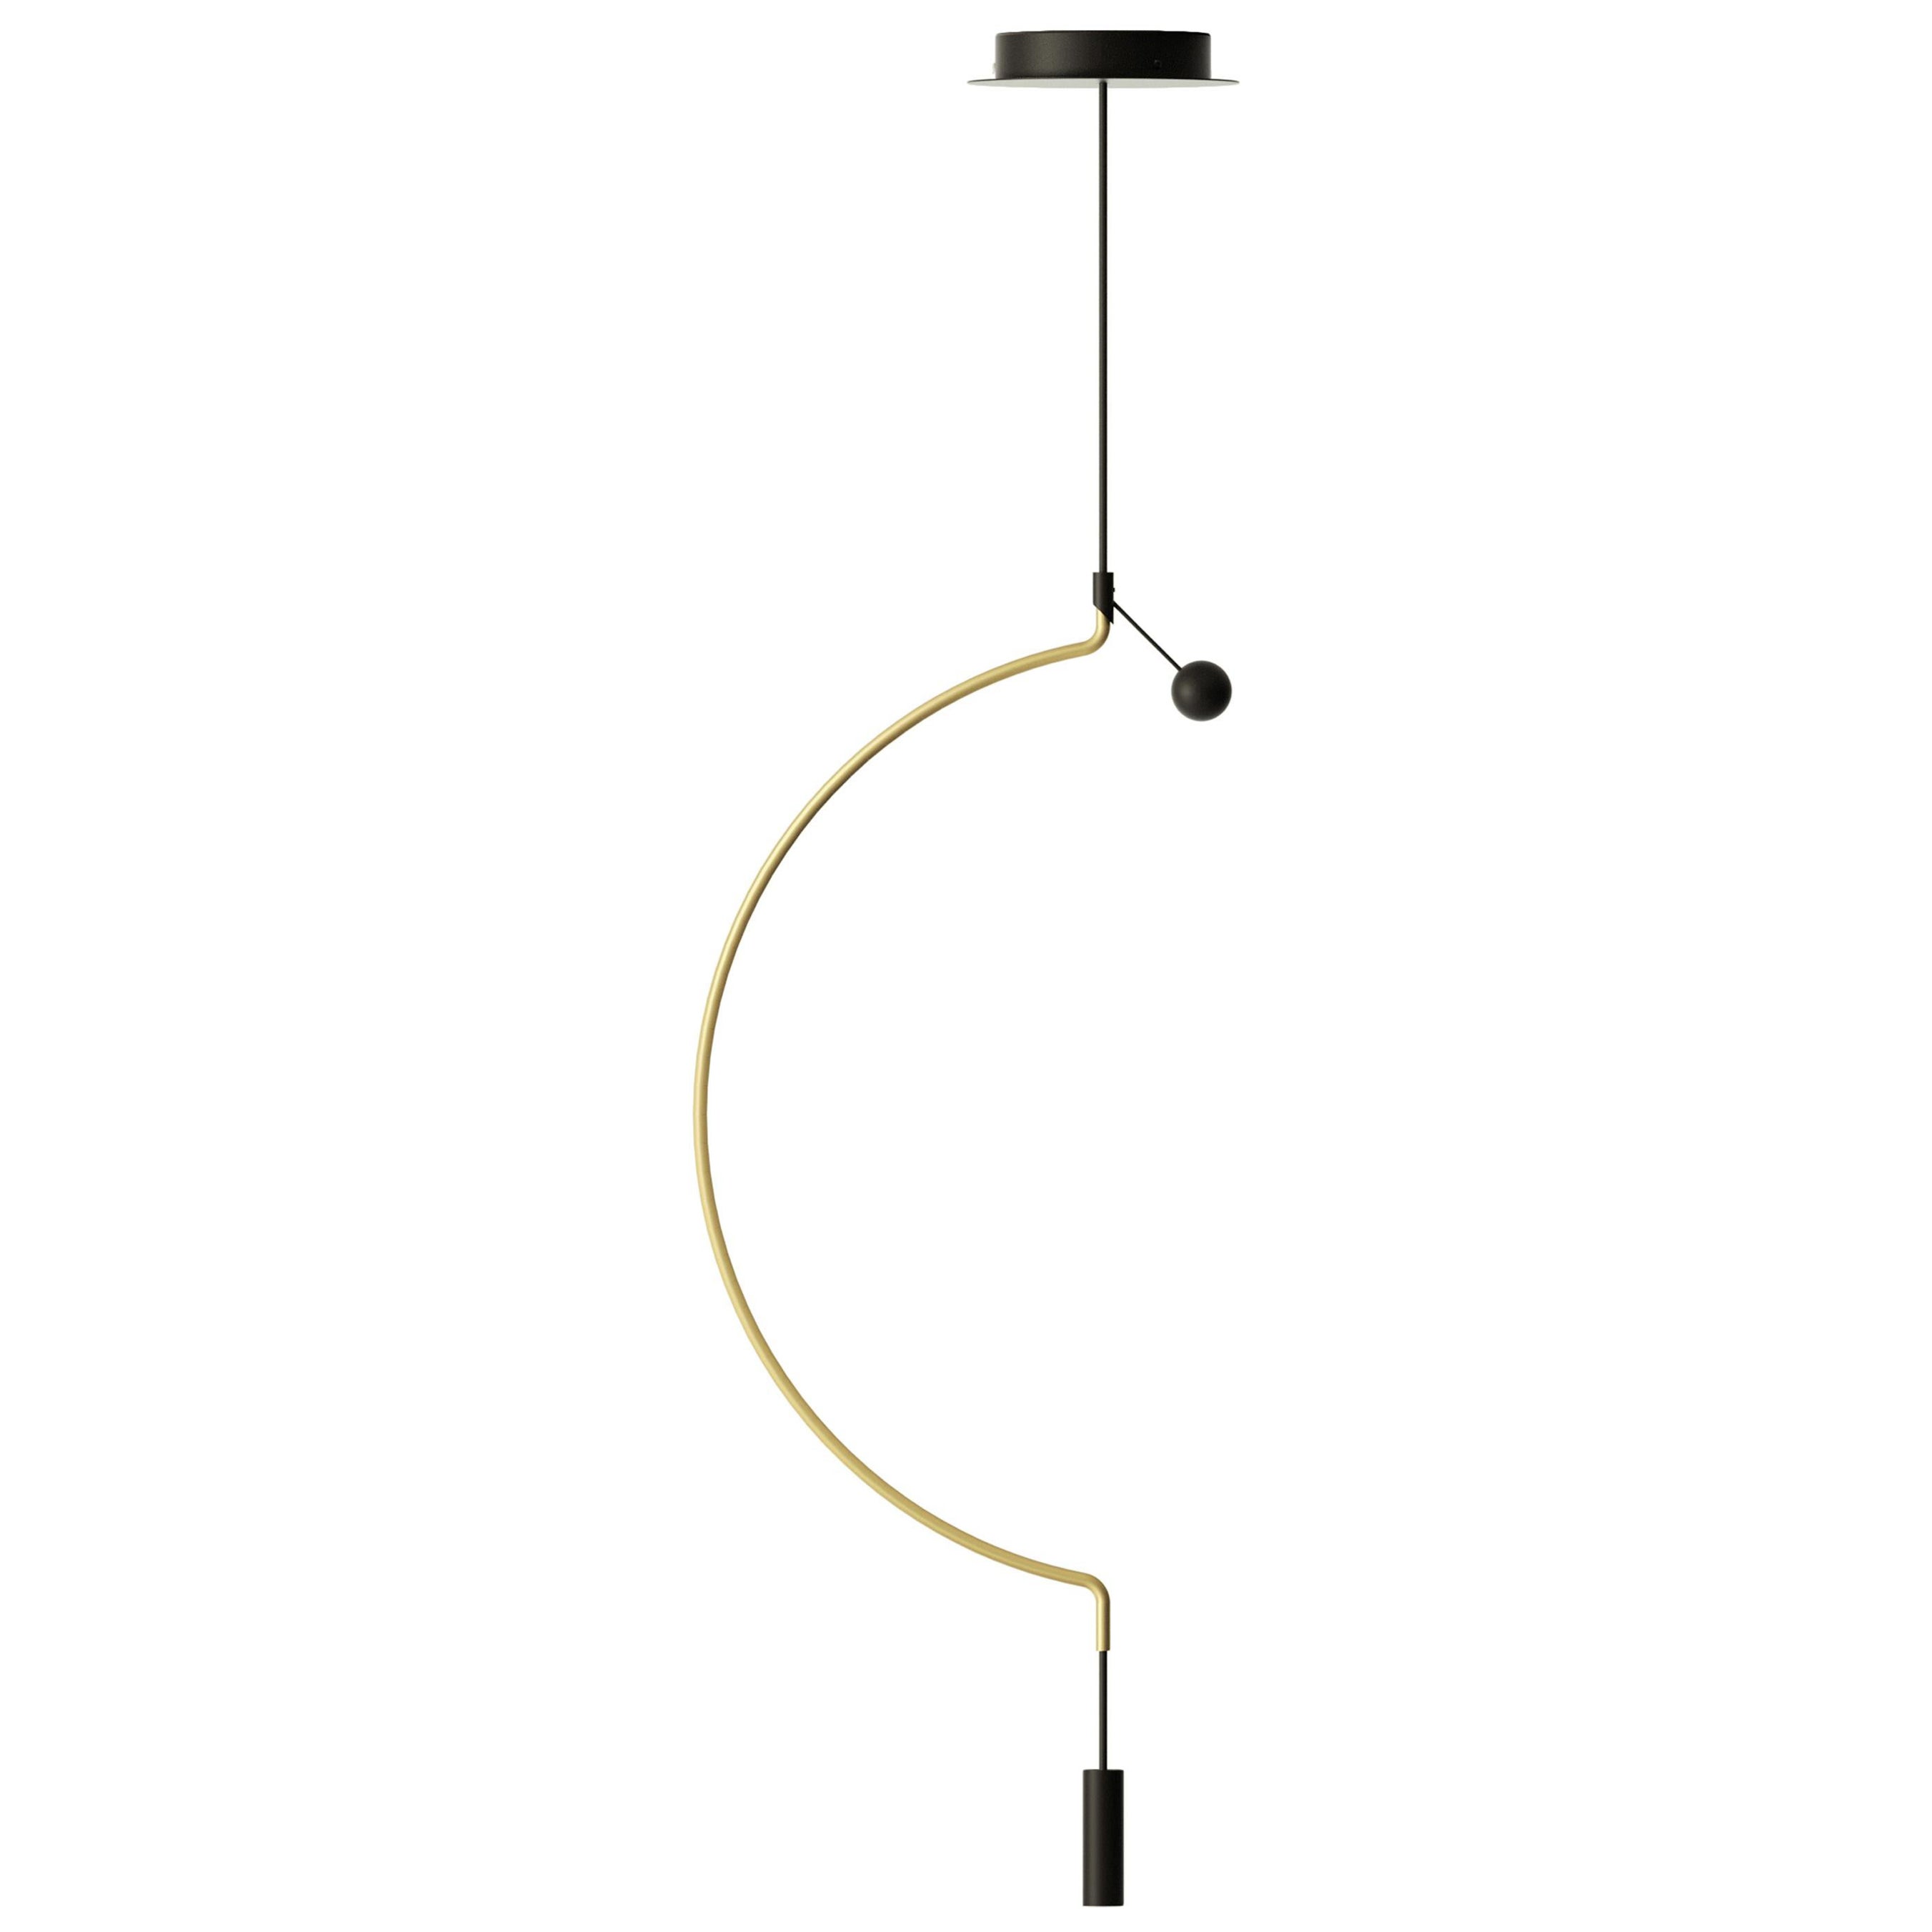 Axolight Liaison Model M1 Pendant Lamp in Gold/Black by Sara Moroni For Sale